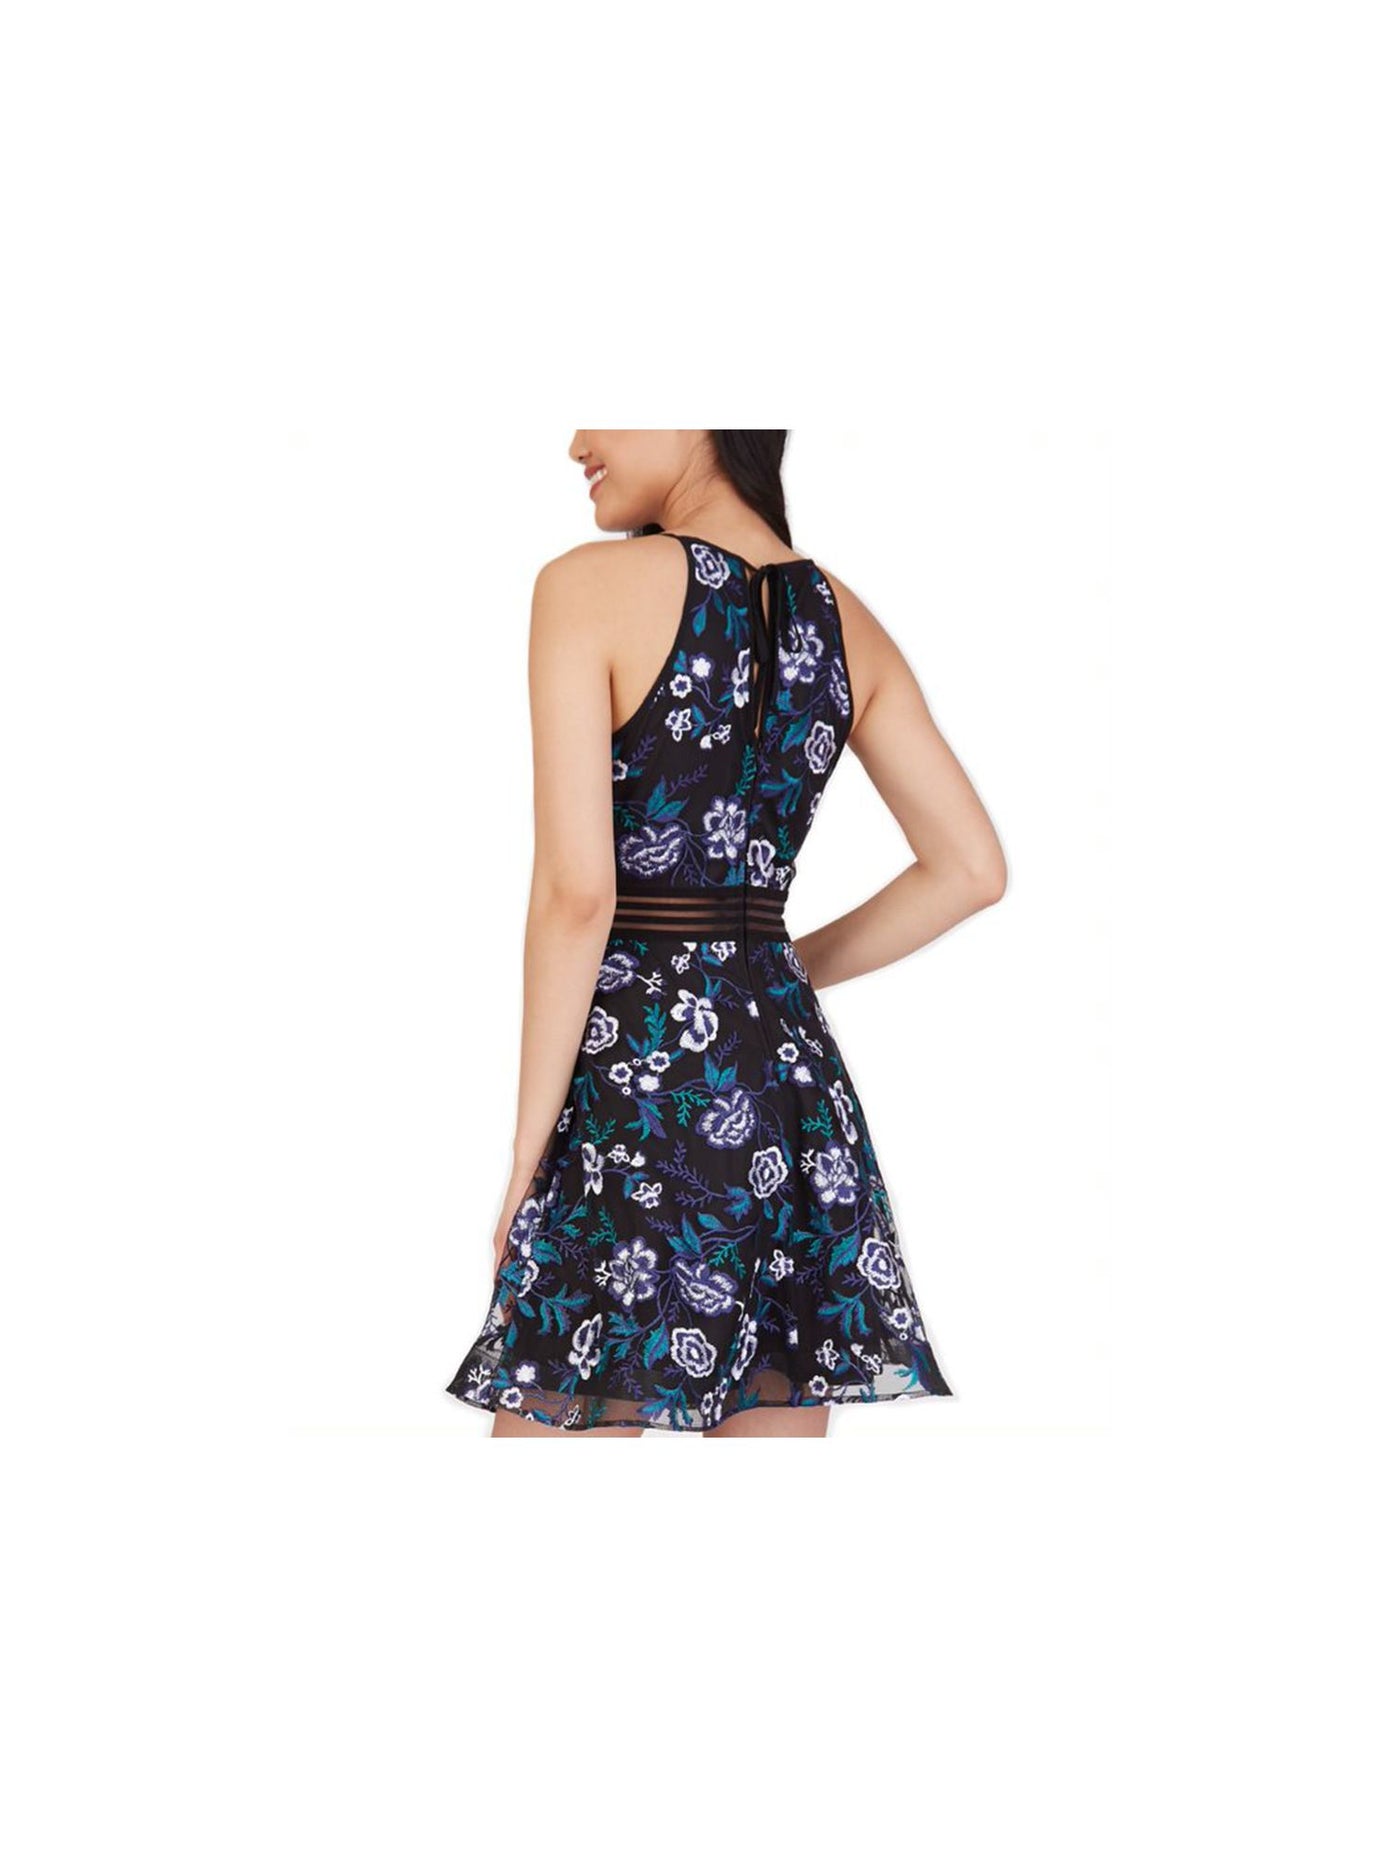 BCX DRESS Womens Black Embroidered Zippered Floral Sleeveless Keyhole Short Fit + Flare Dress Juniors 3